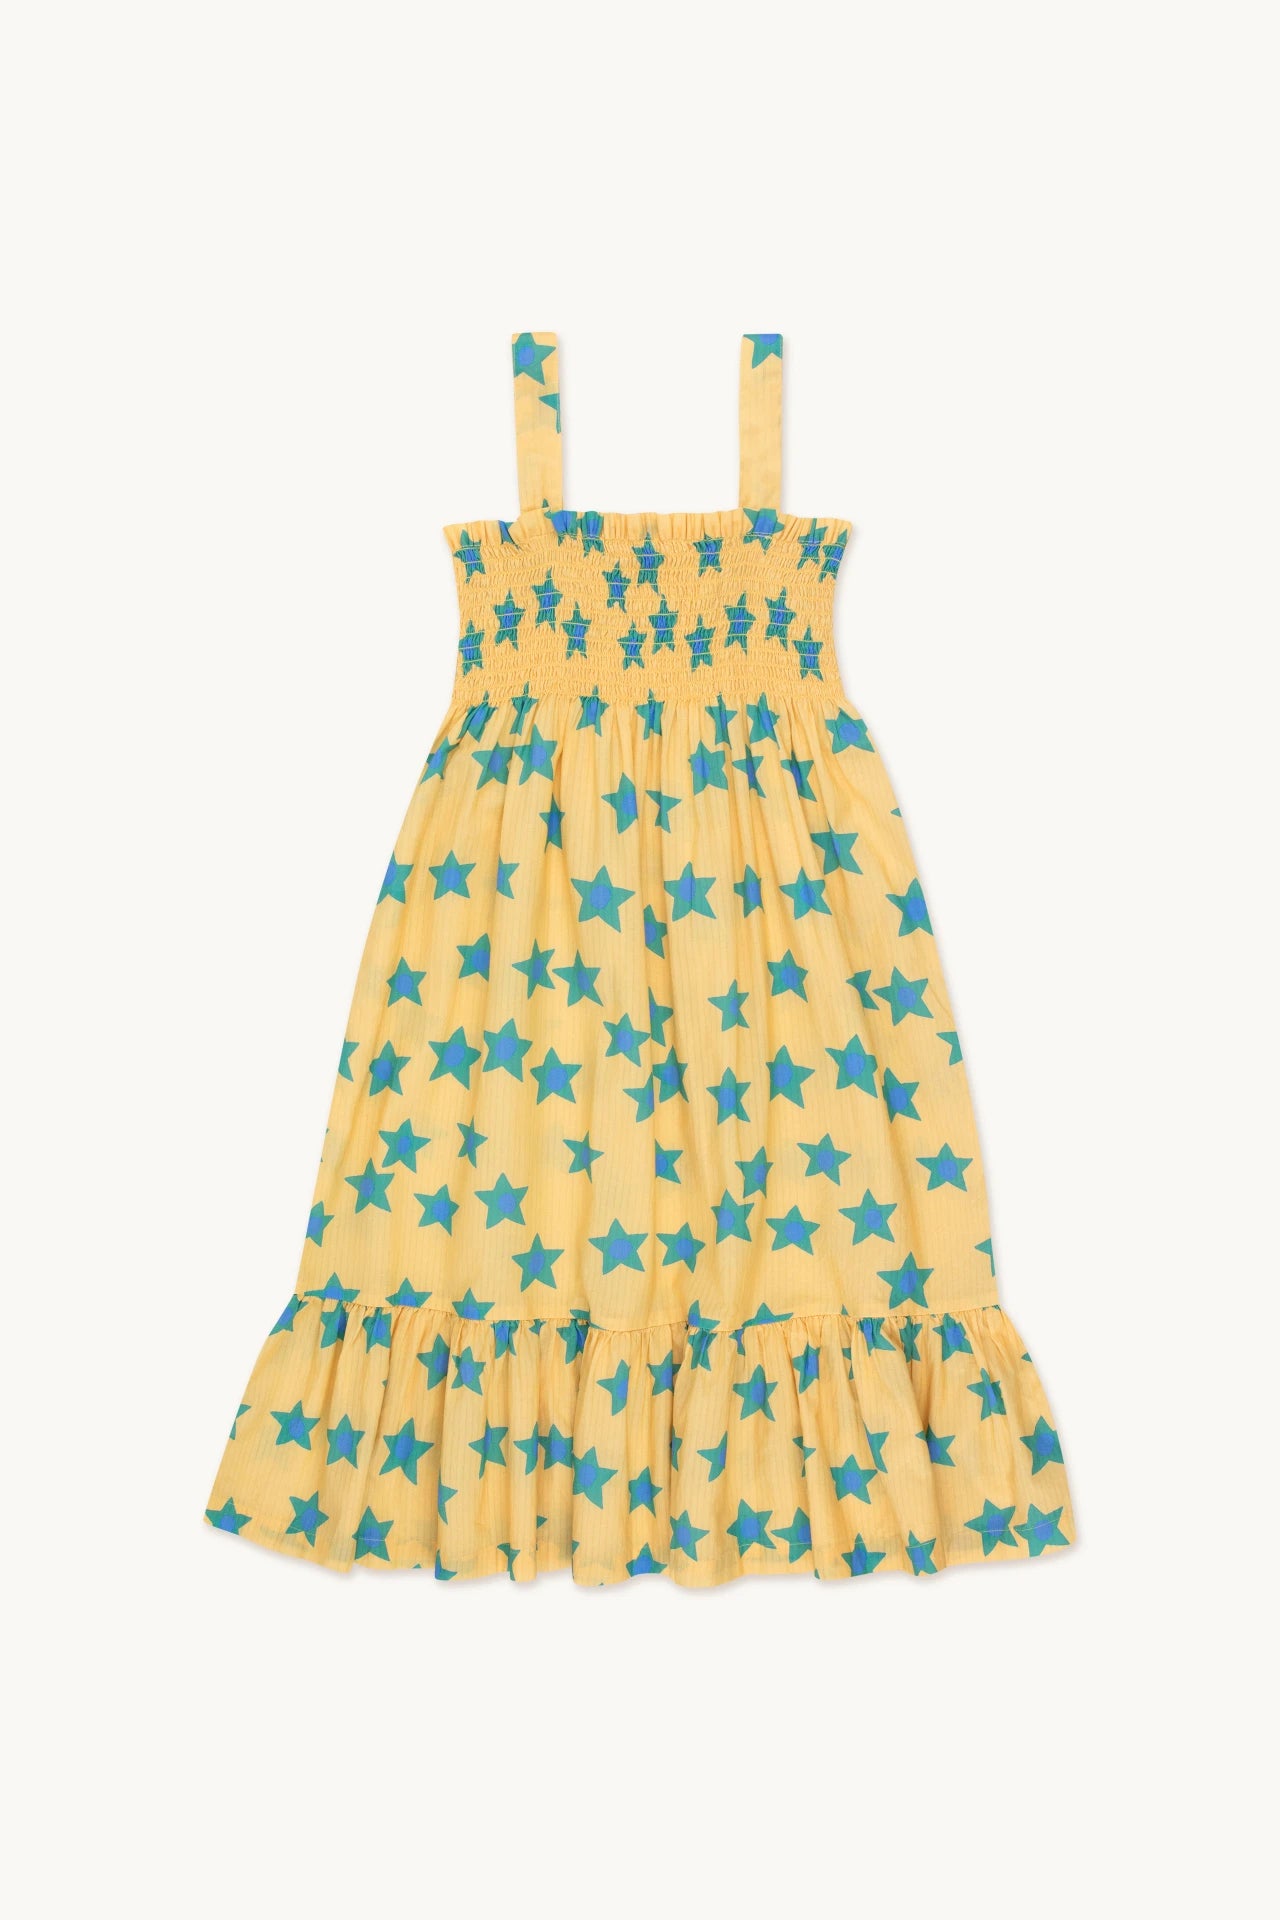 Tinycottons starflowers dress